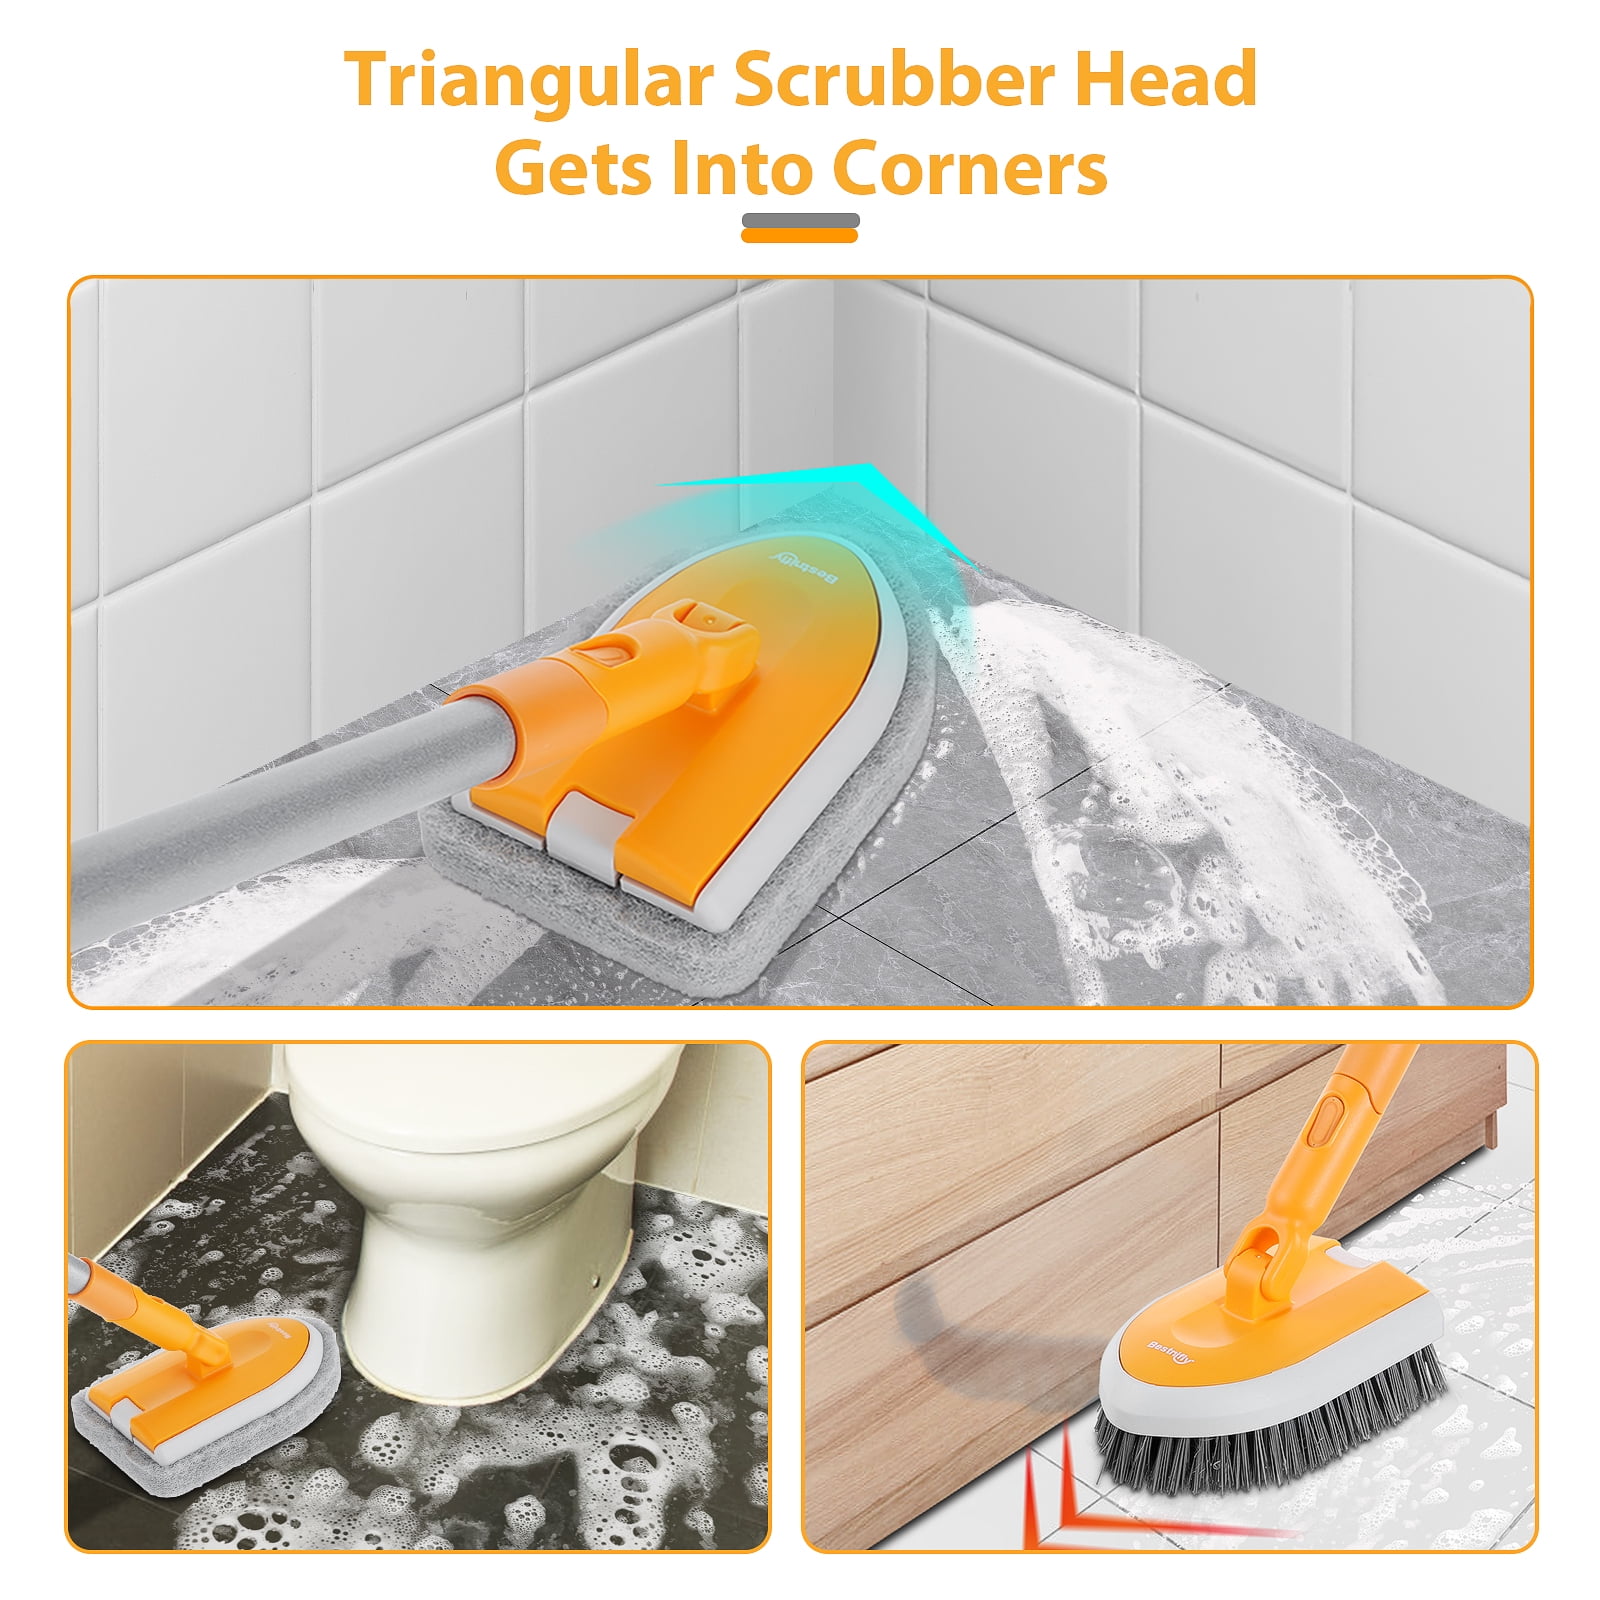 Flexible Scrub Brush 1744  BISSELL® Bathroom Kitchen Brush